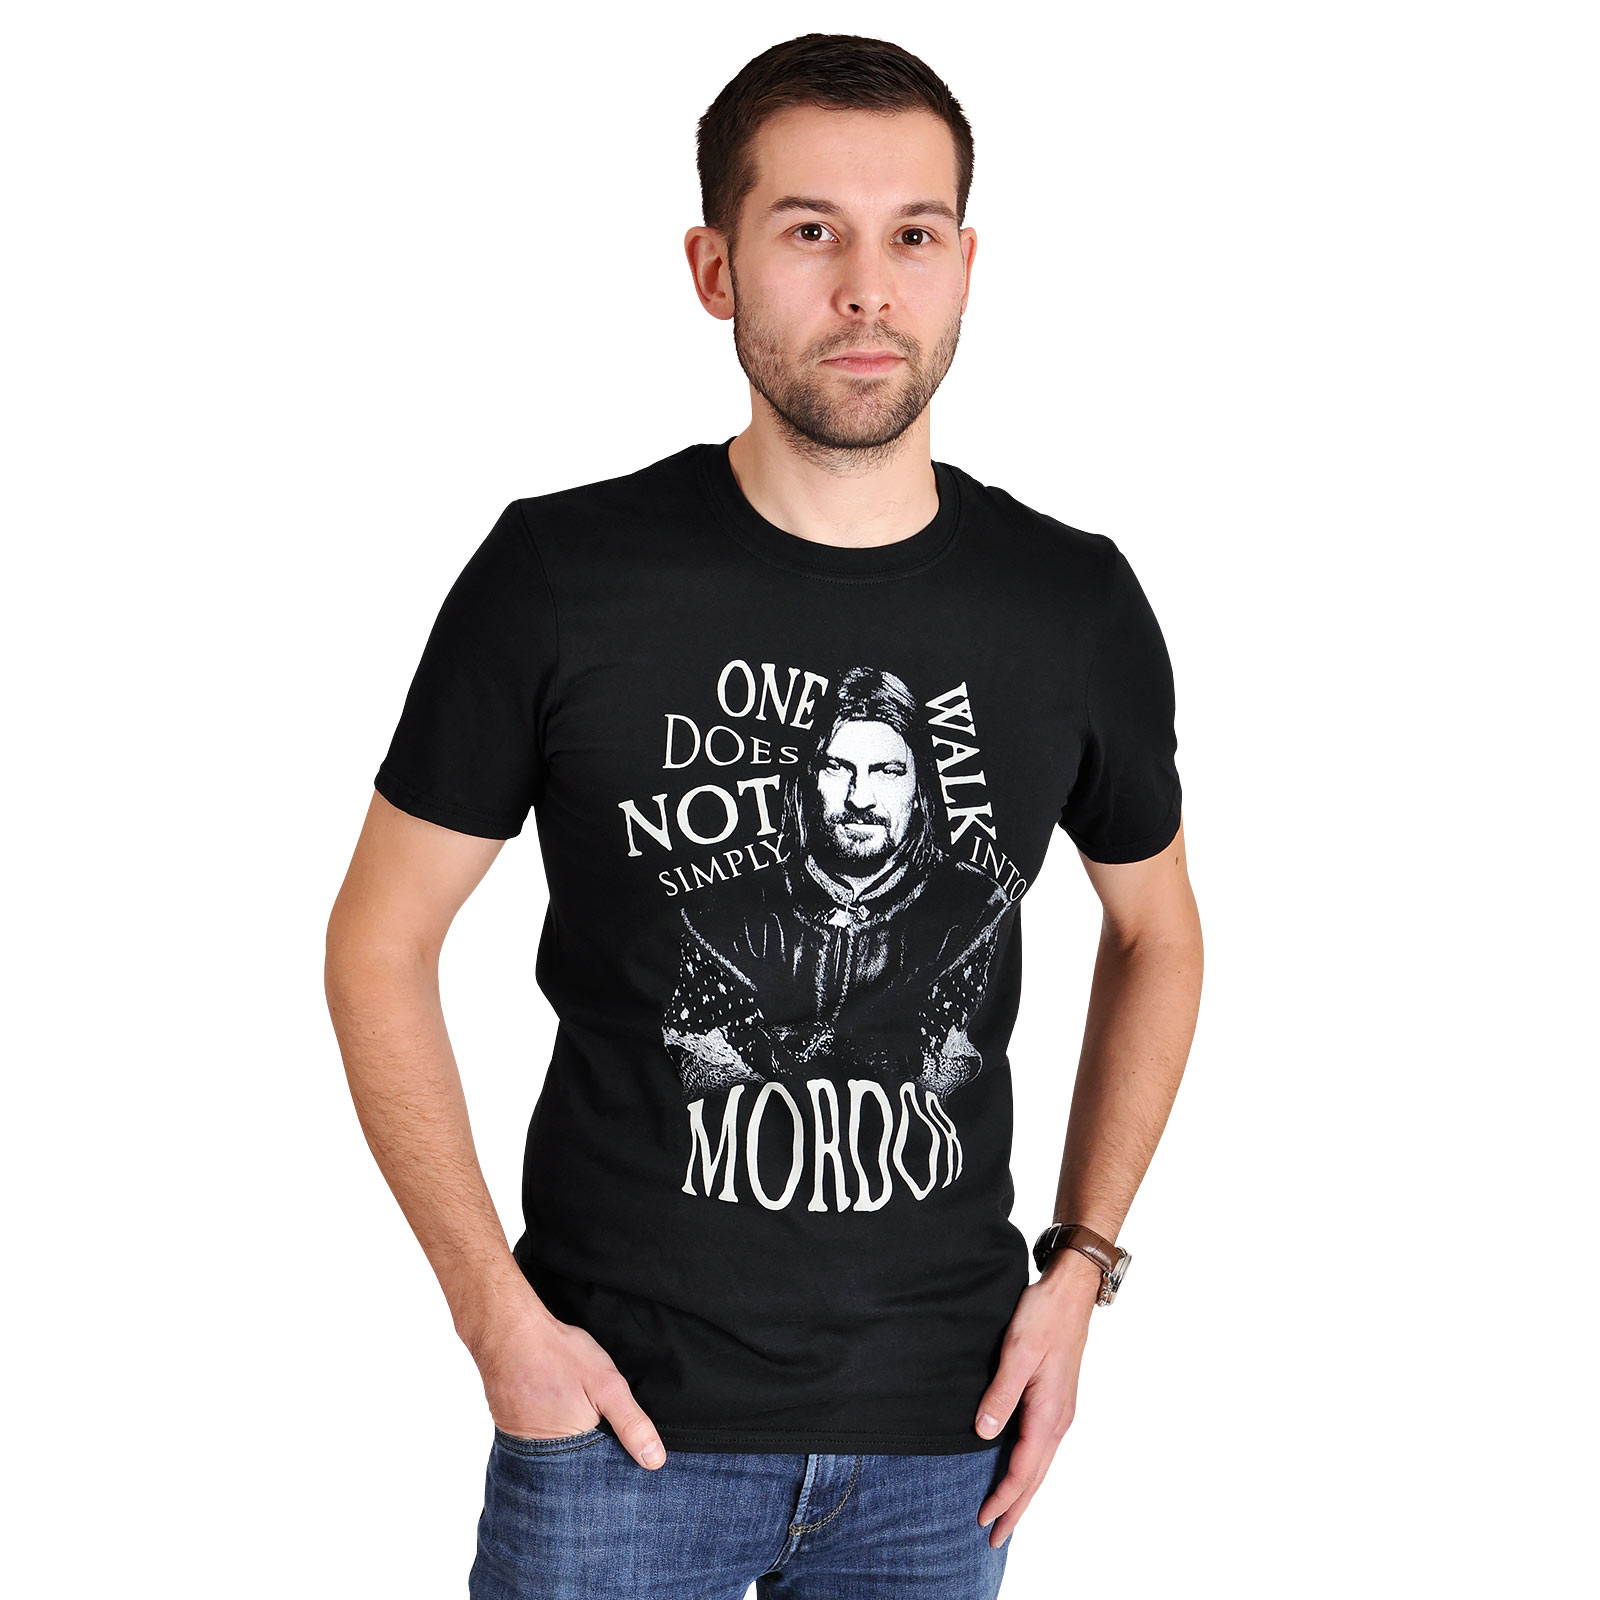 Herr der Ringe - Boromir Walk into Mordor T-Shirt schwarz